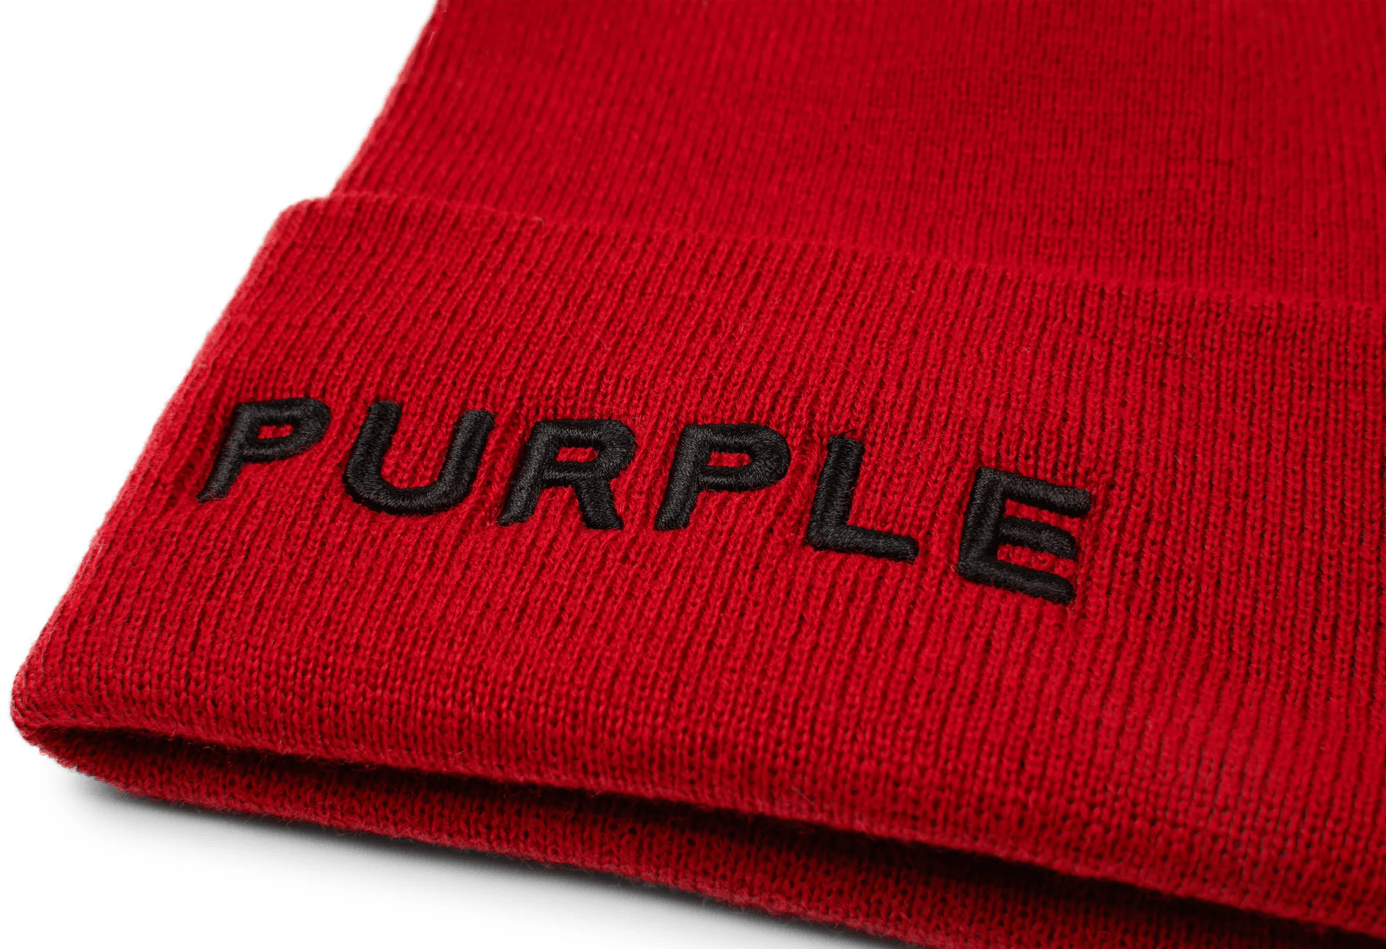 Purple Brand Acrylic Cuffed Beanie Red - Gravity NYC